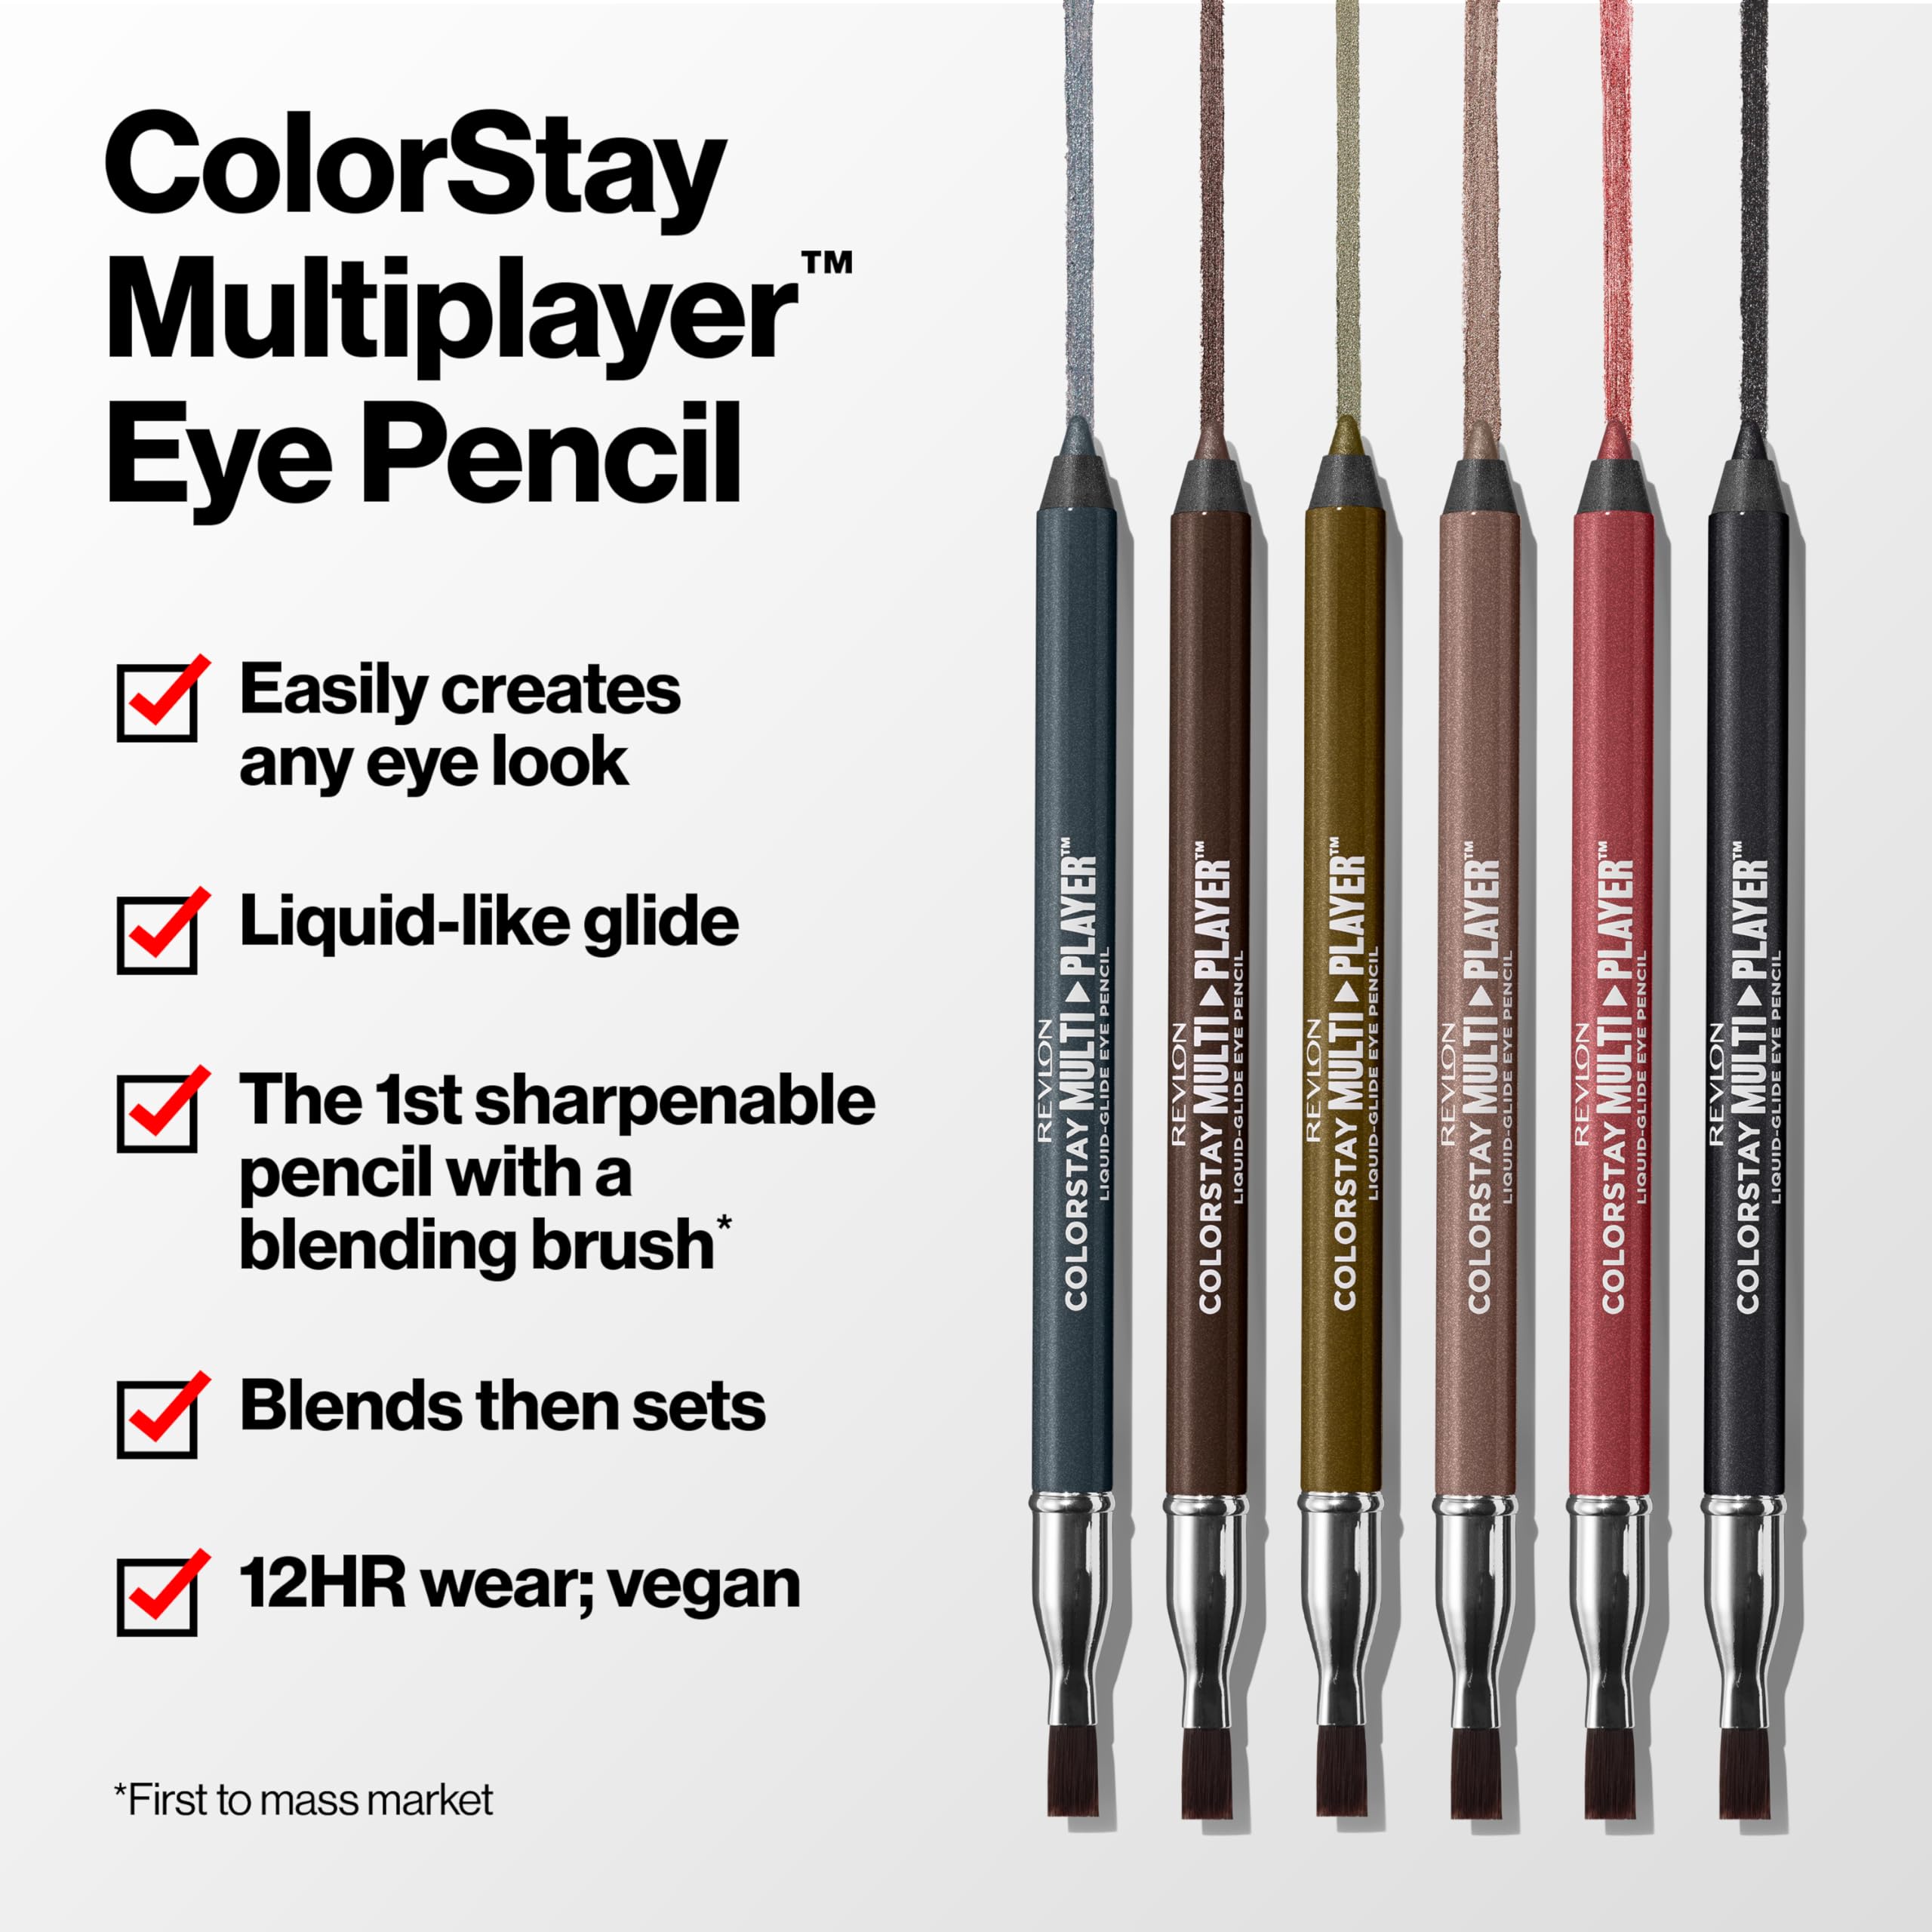 REVLON ColorStay Multiplayer Liquid-Glide Eye Pencil, Multi-Use Eye Makeup With Blending Brush, Blends Then Sets, Creamy Texture, Waterproof, Smudge-proof, Longwearing, 404 Under the Radar, 0.03 oz